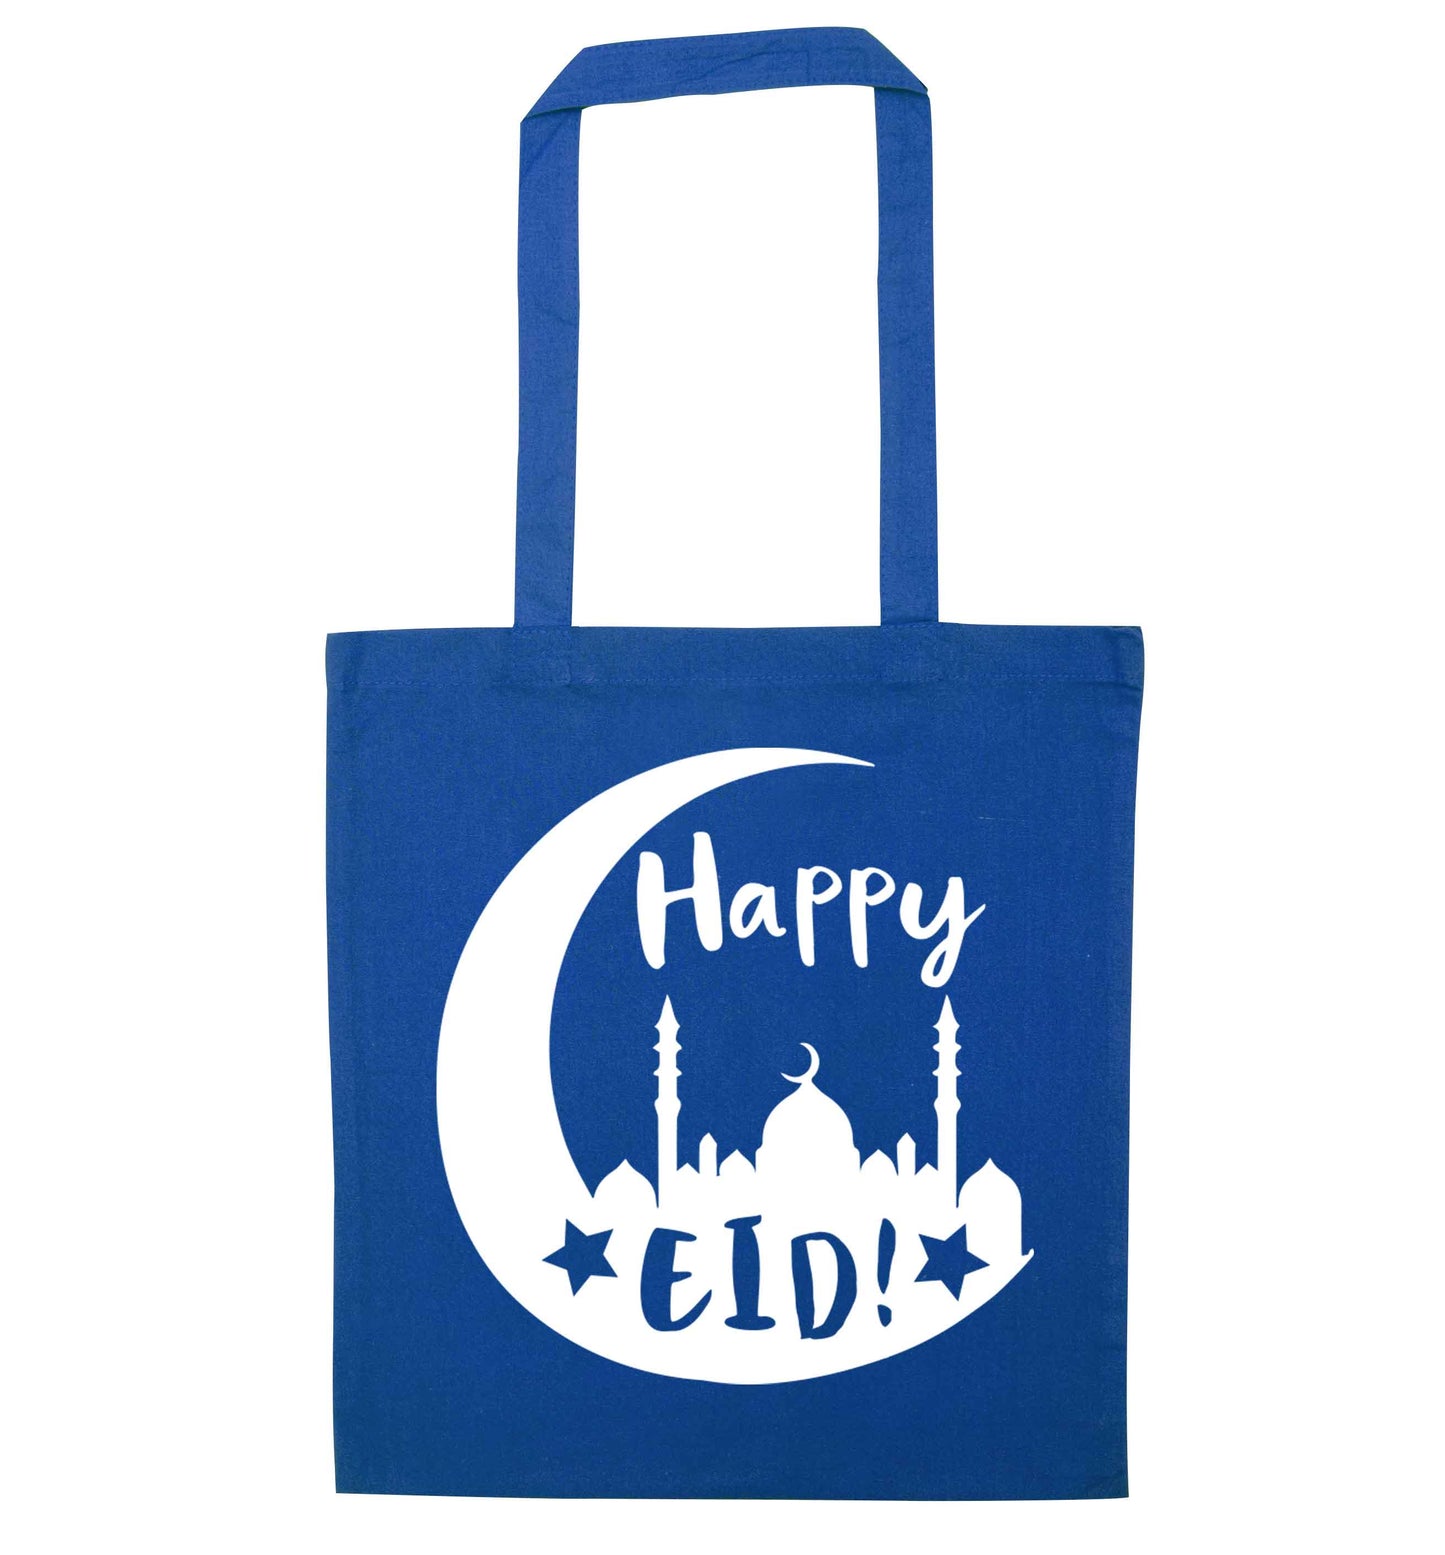 Happy Eid blue tote bag